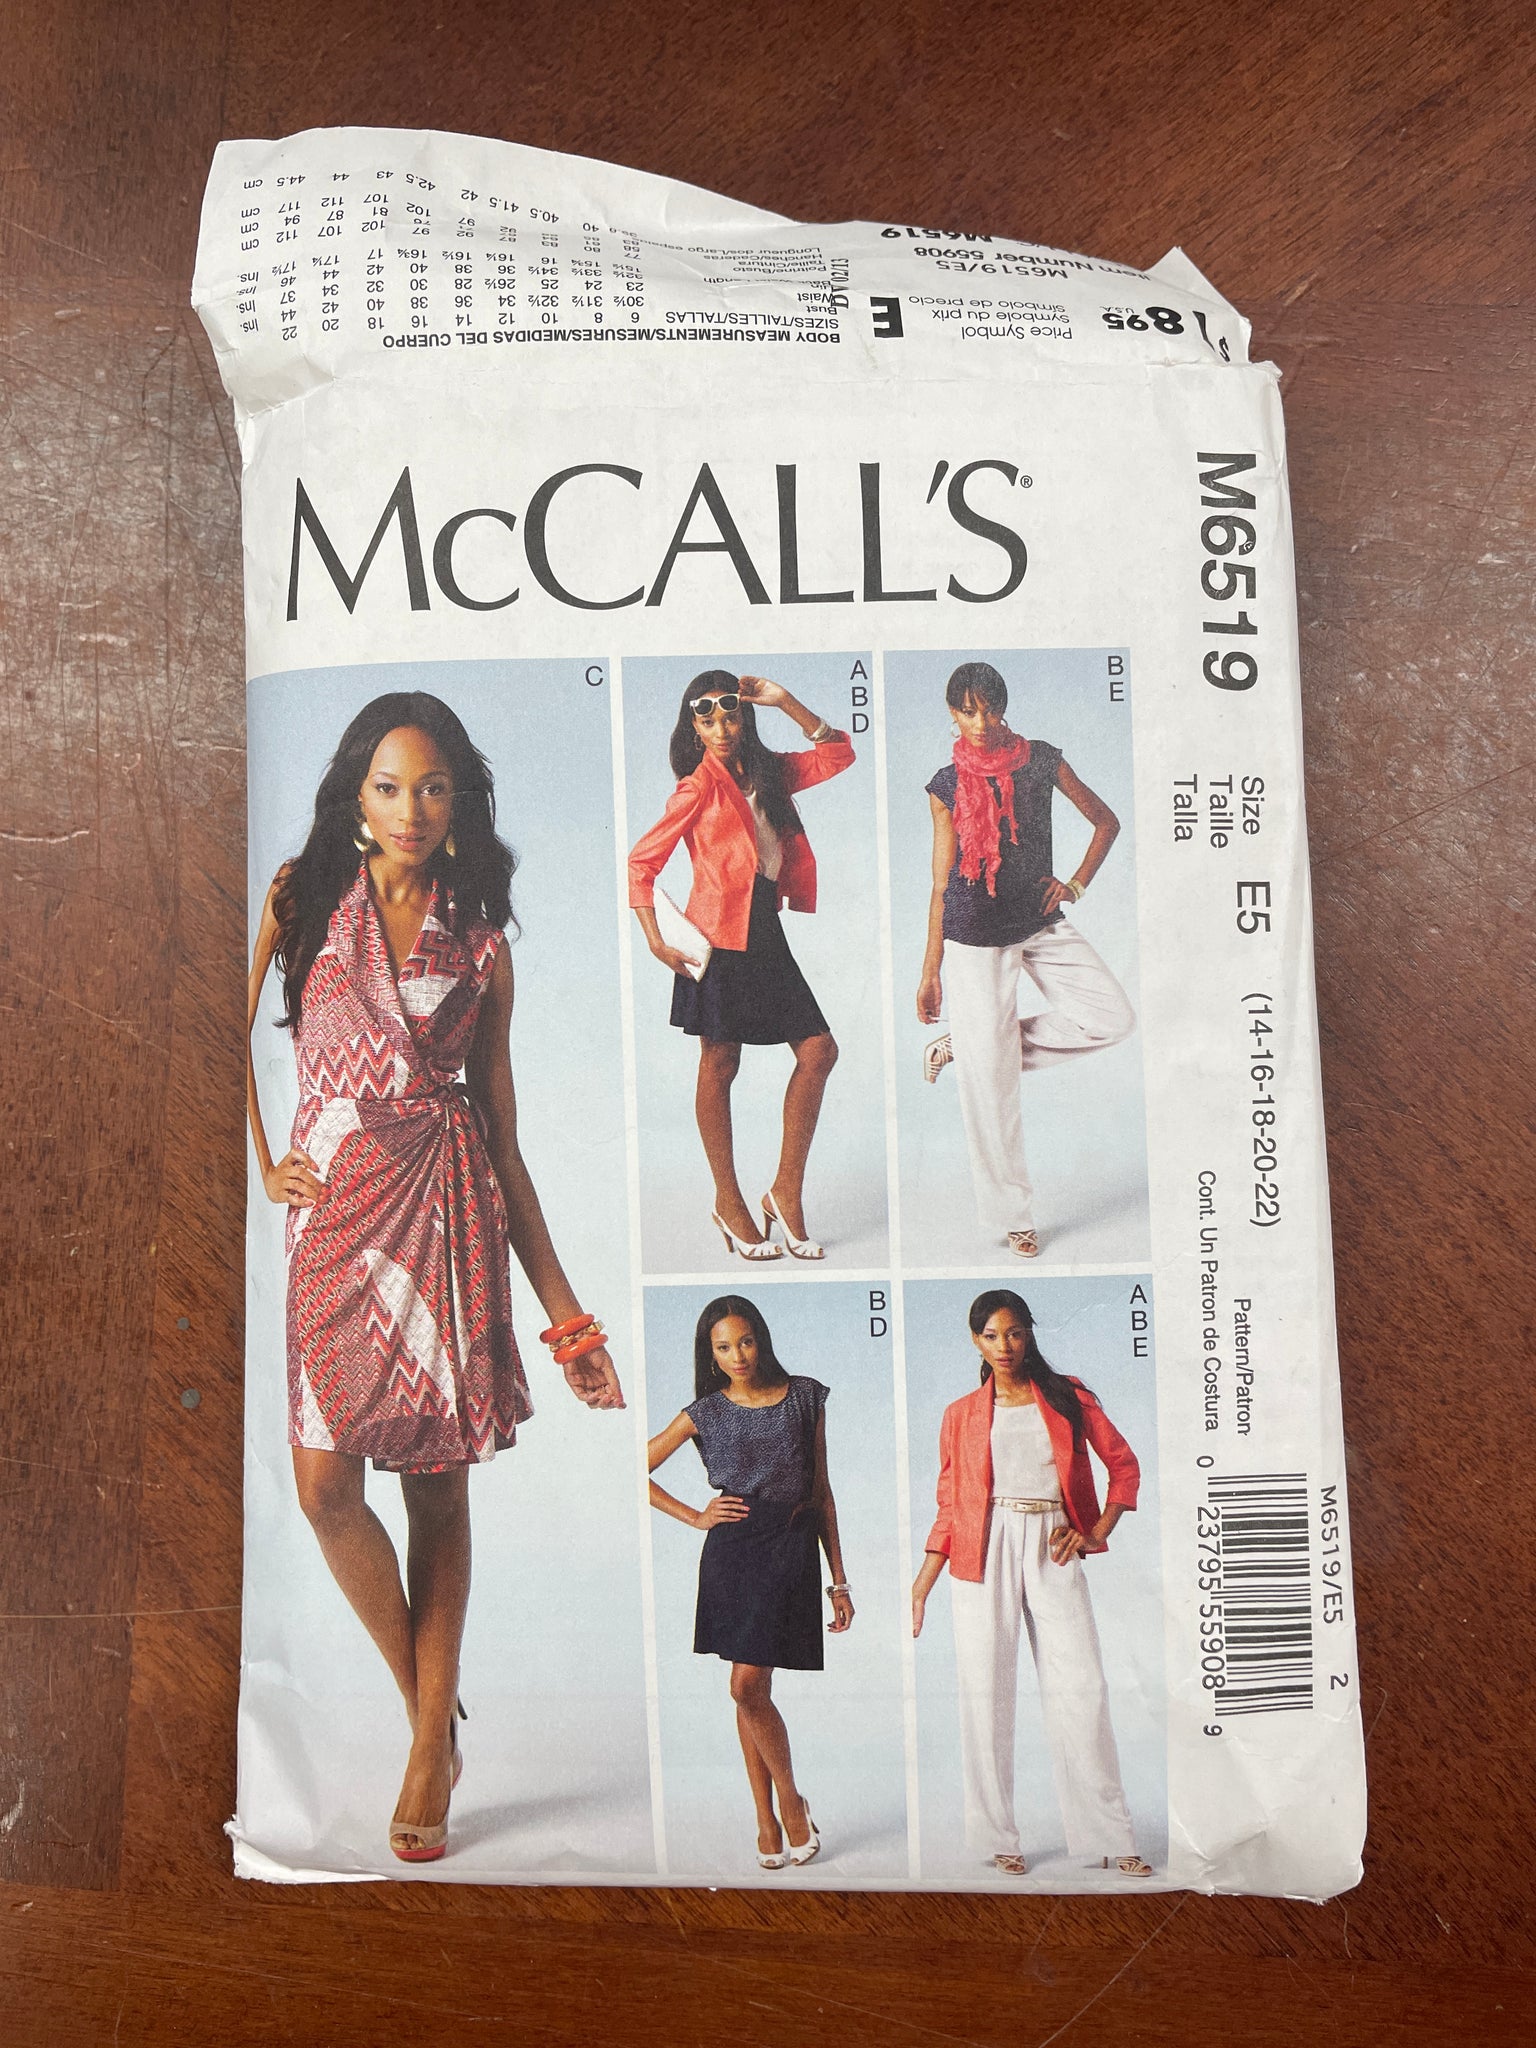 2012 McCall's 6519 Pattern - Women's Jacket, Top, Dress, Skirt and Pants